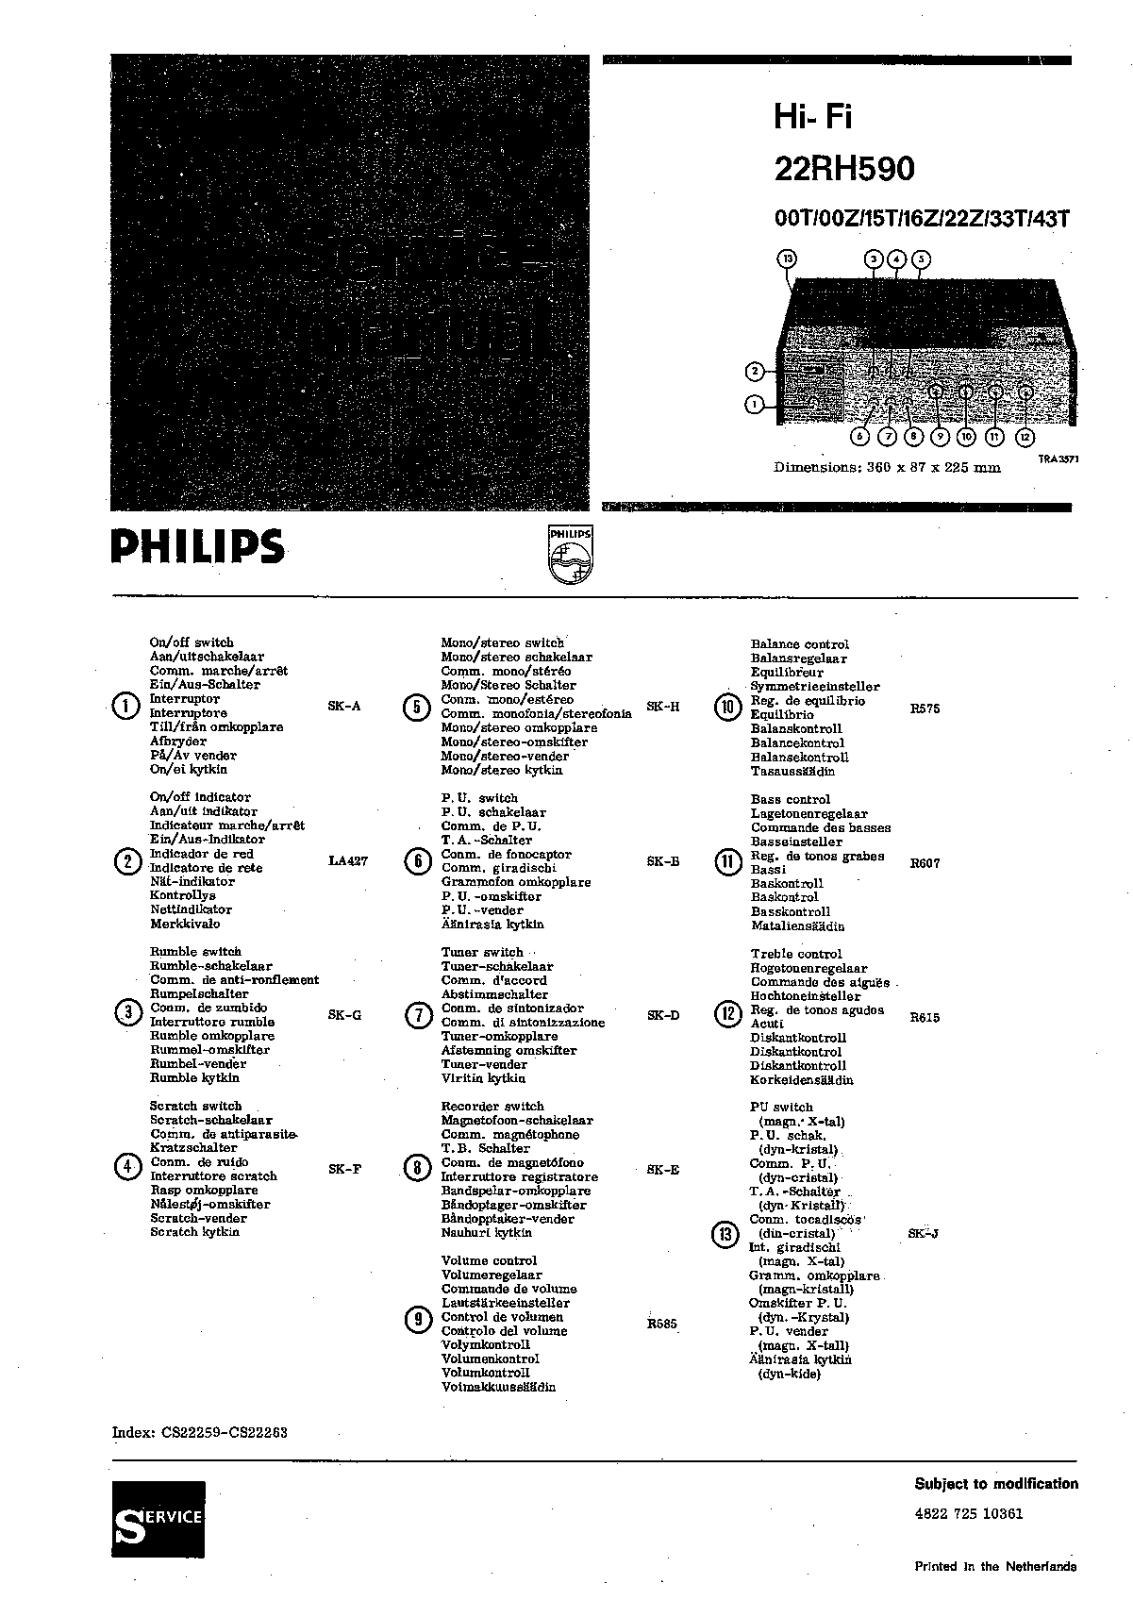 Philips 22-RH-590 Service Manual